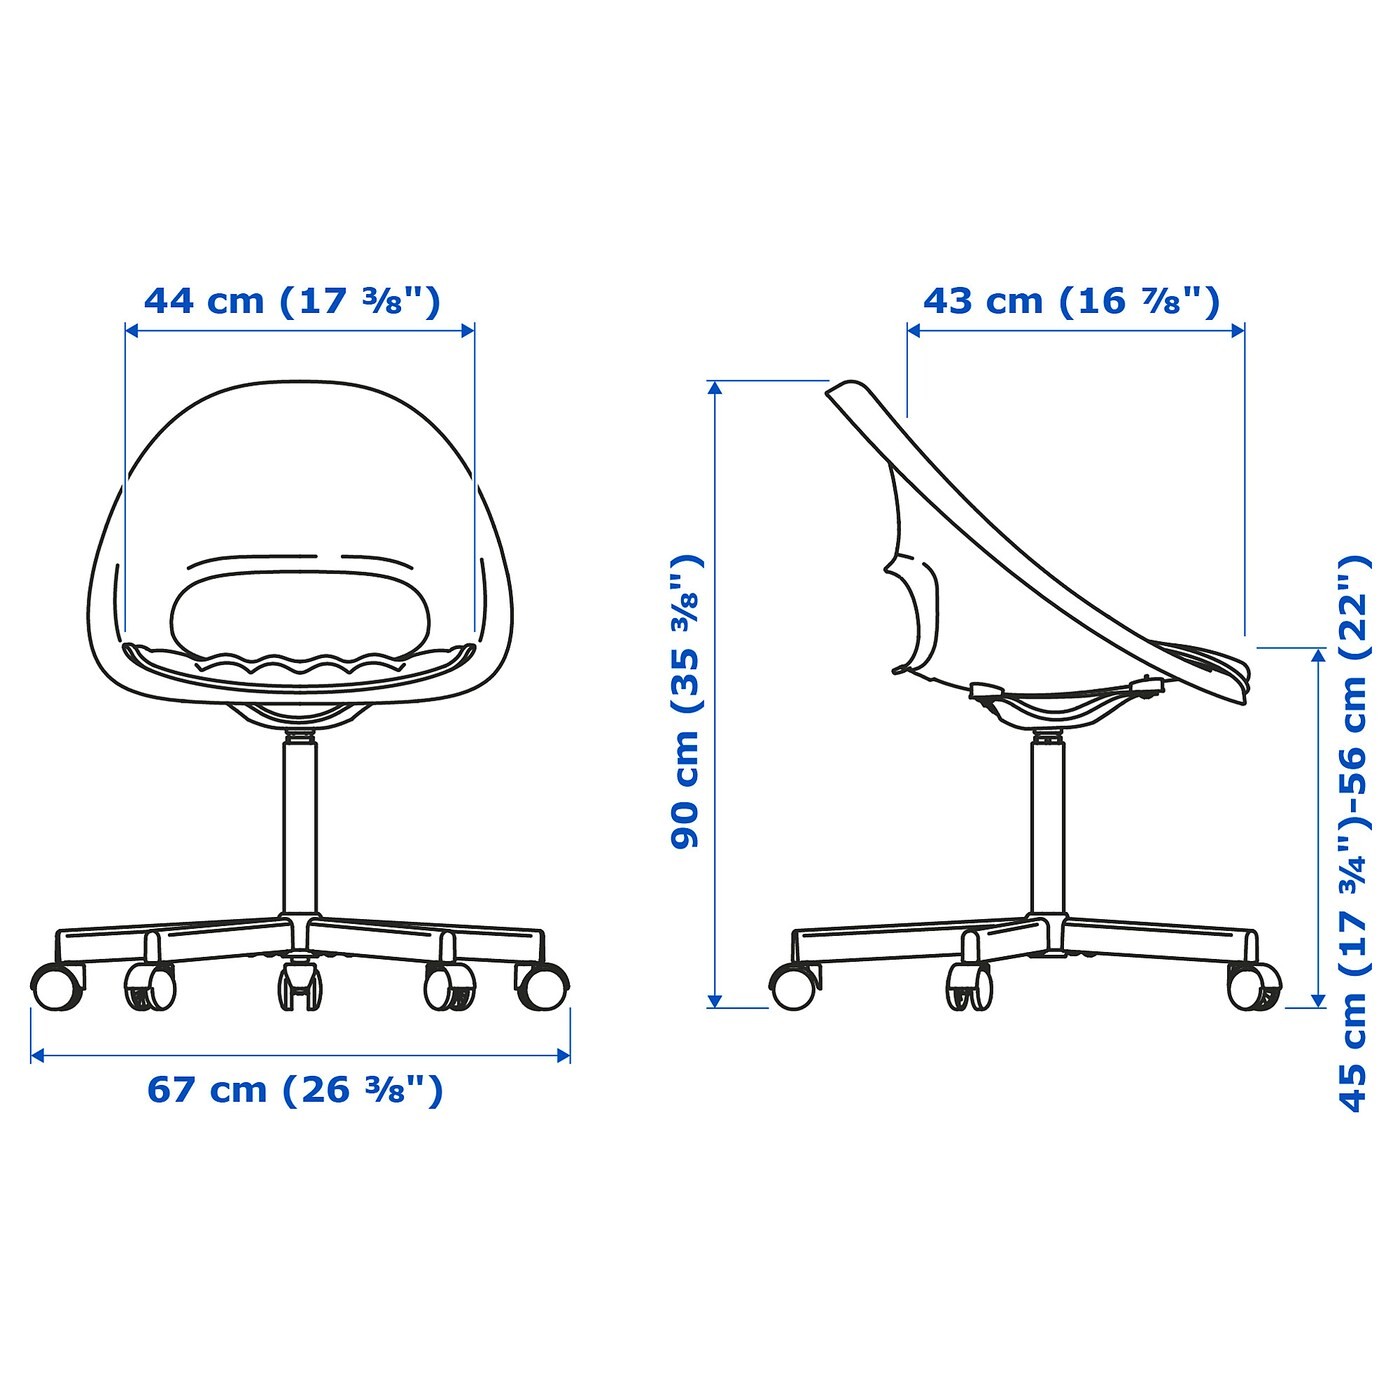 LOBERGET / BLYSKÄR Swivel chair with pad